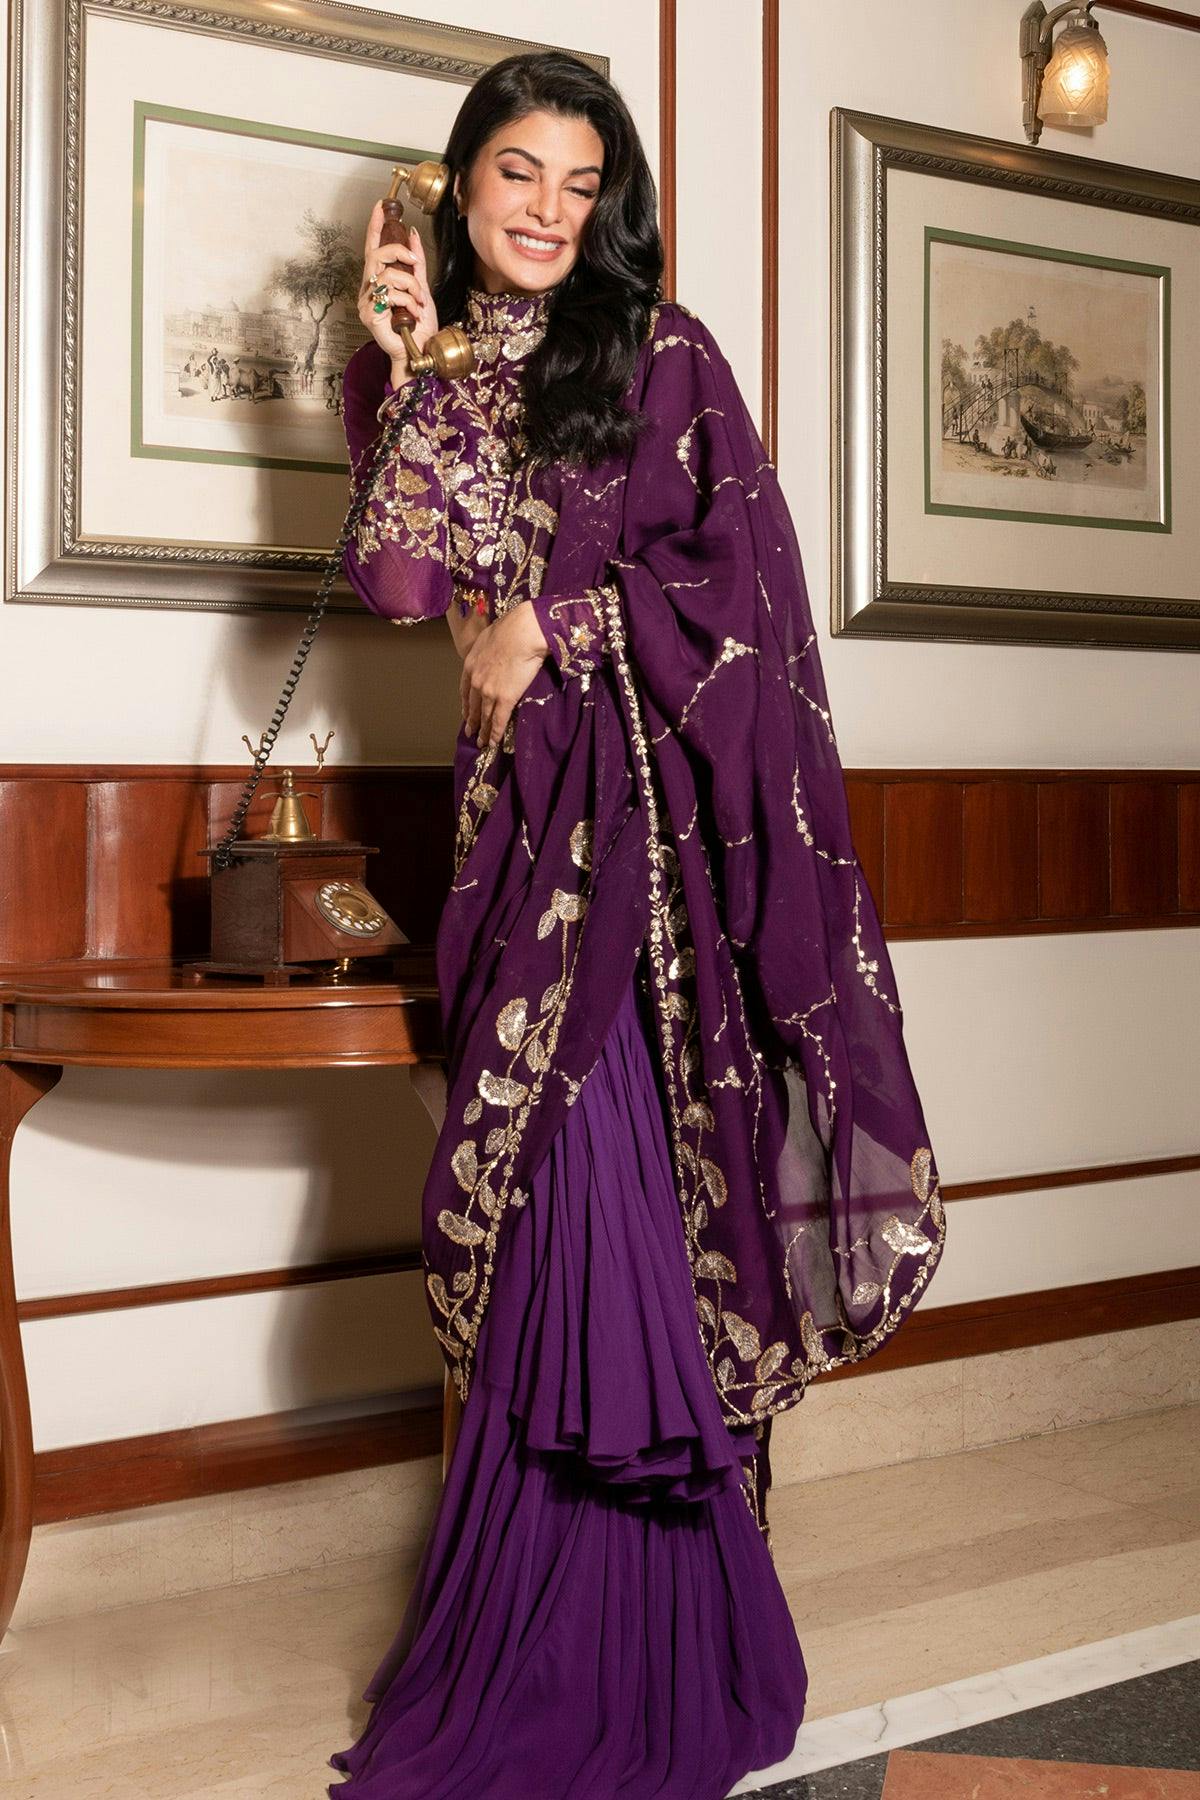 Jacqueline Fernandez In VIARA, a product by Mahima Mahajan